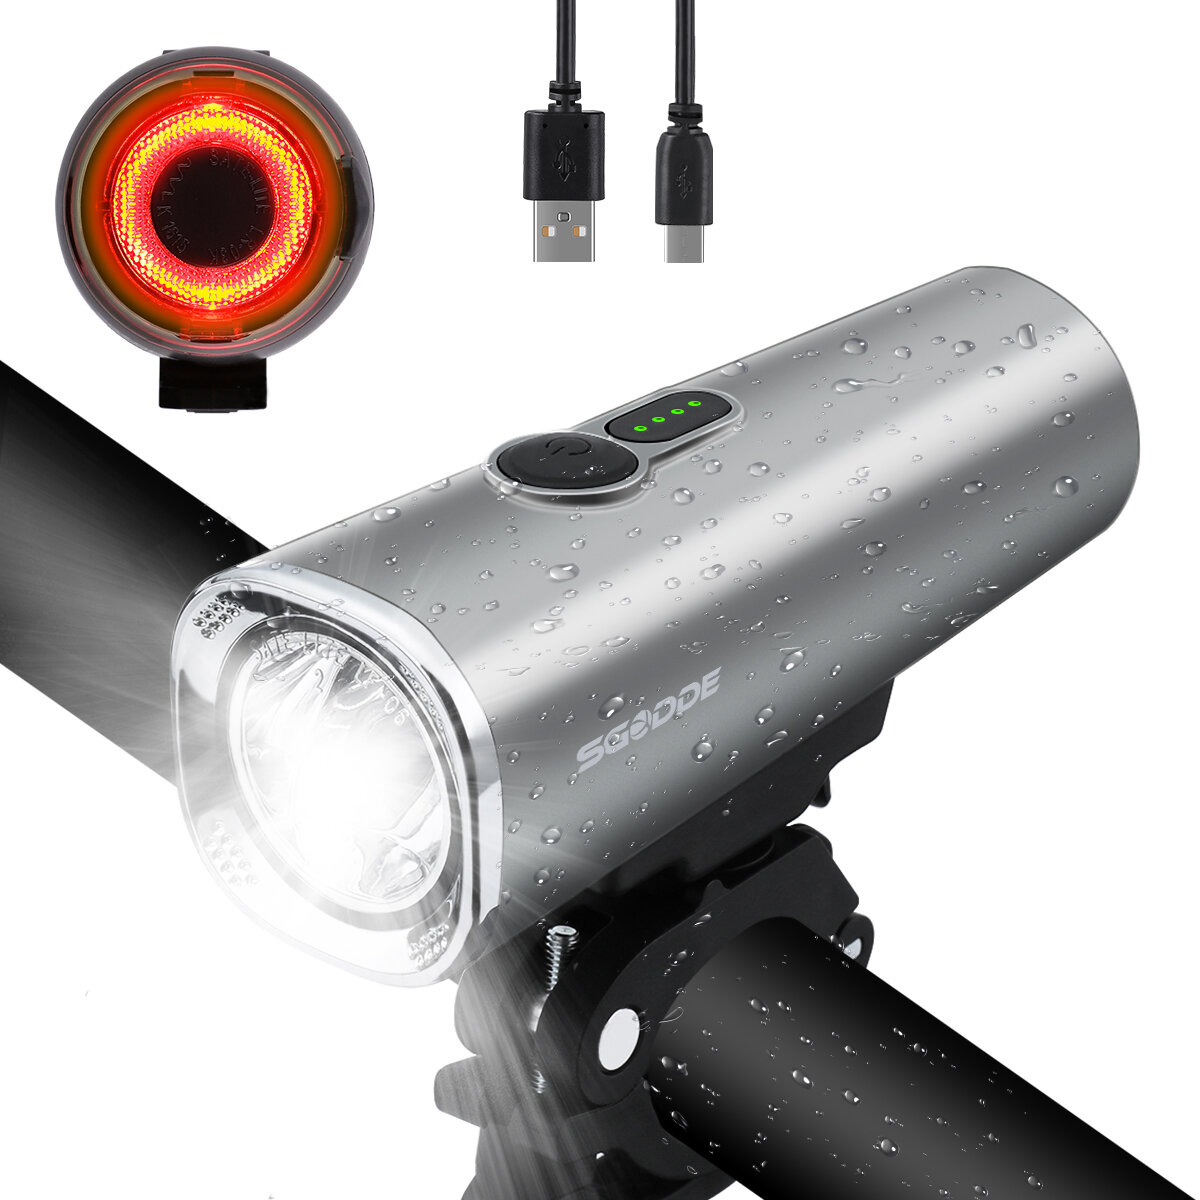 

SGODDE 600LM LED Bike Light Set 5 Modes Adjustable USB Rechargeable Super Bright Front Light with Taillight for MTB Road